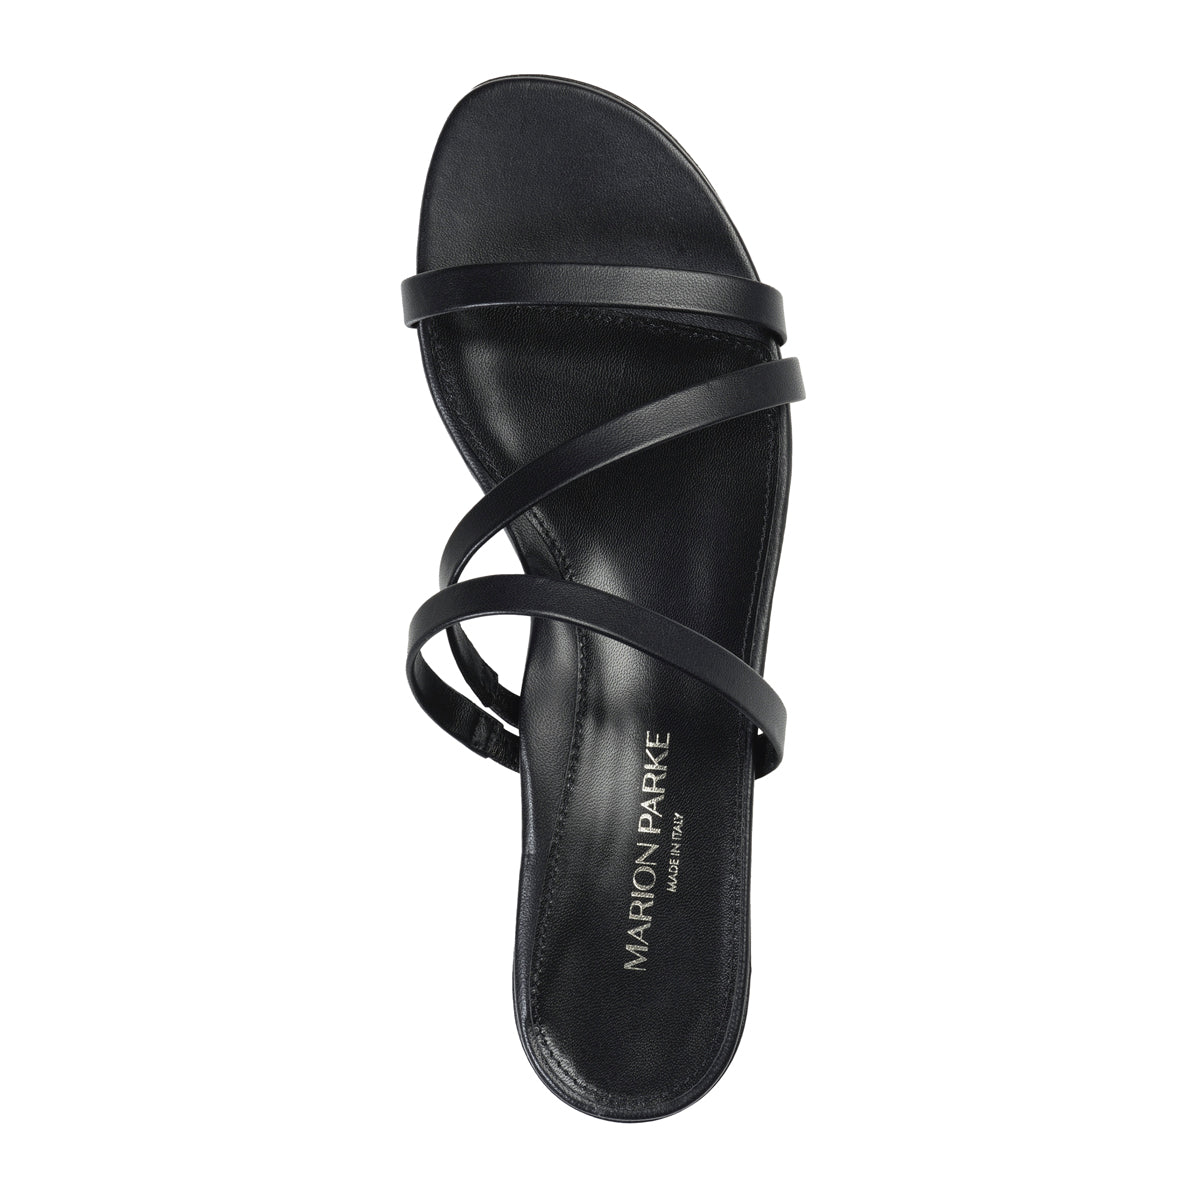 Mitzi Flat Sandal | Black 10mm Heel | Marion Parke